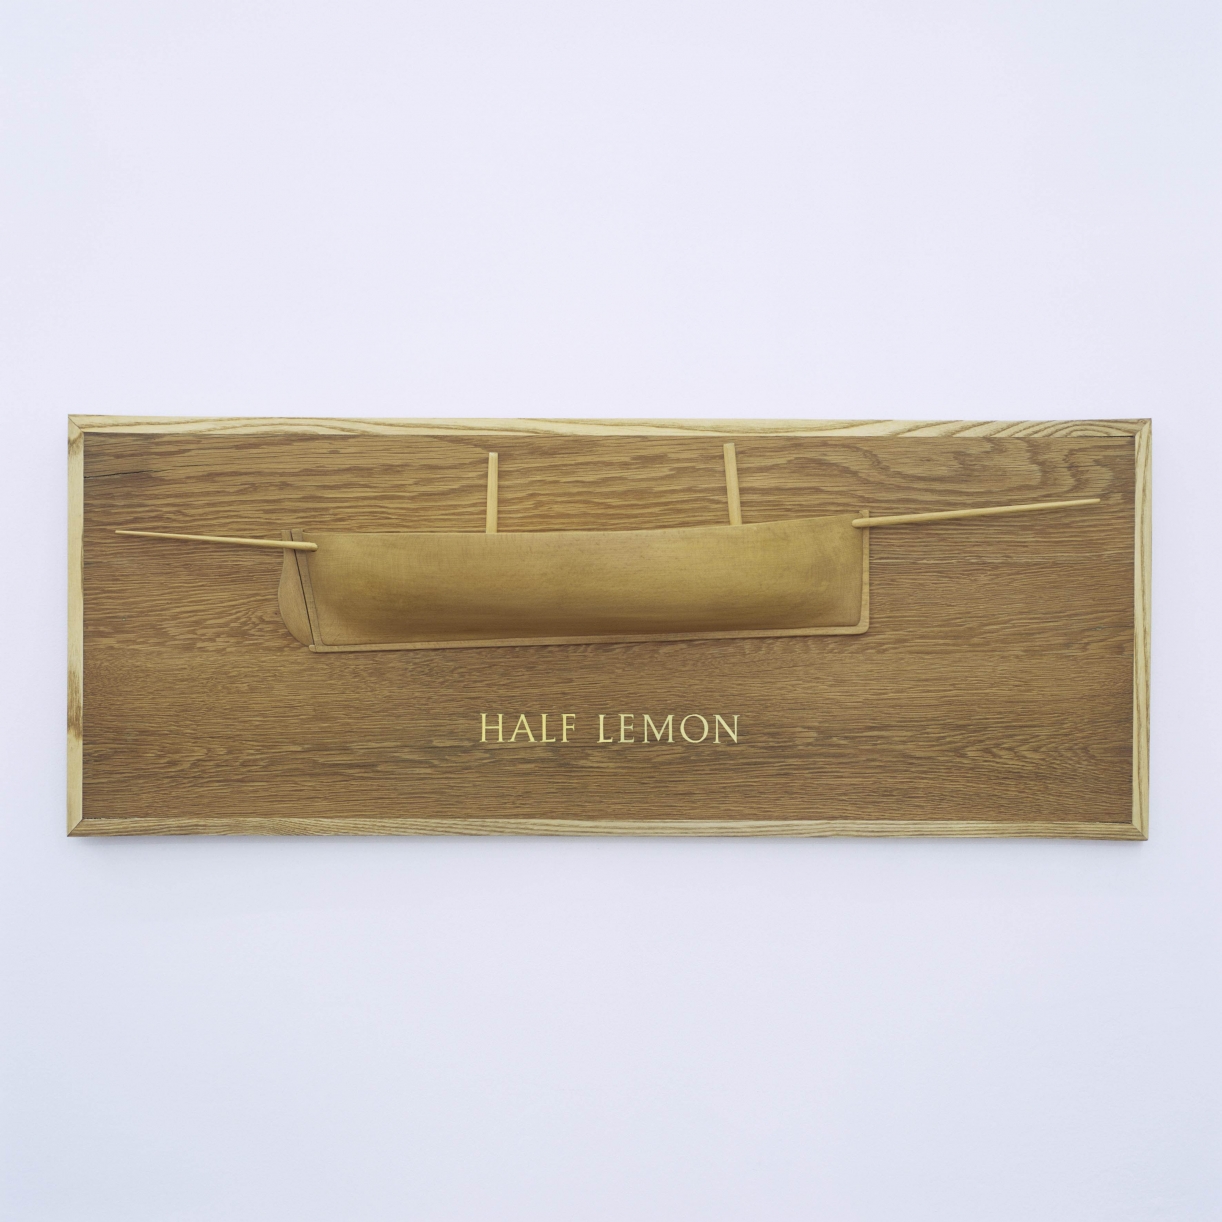 Half Lemon, 1998 with Keith Brookwell, Wood, 39 x 82 x 2 cm